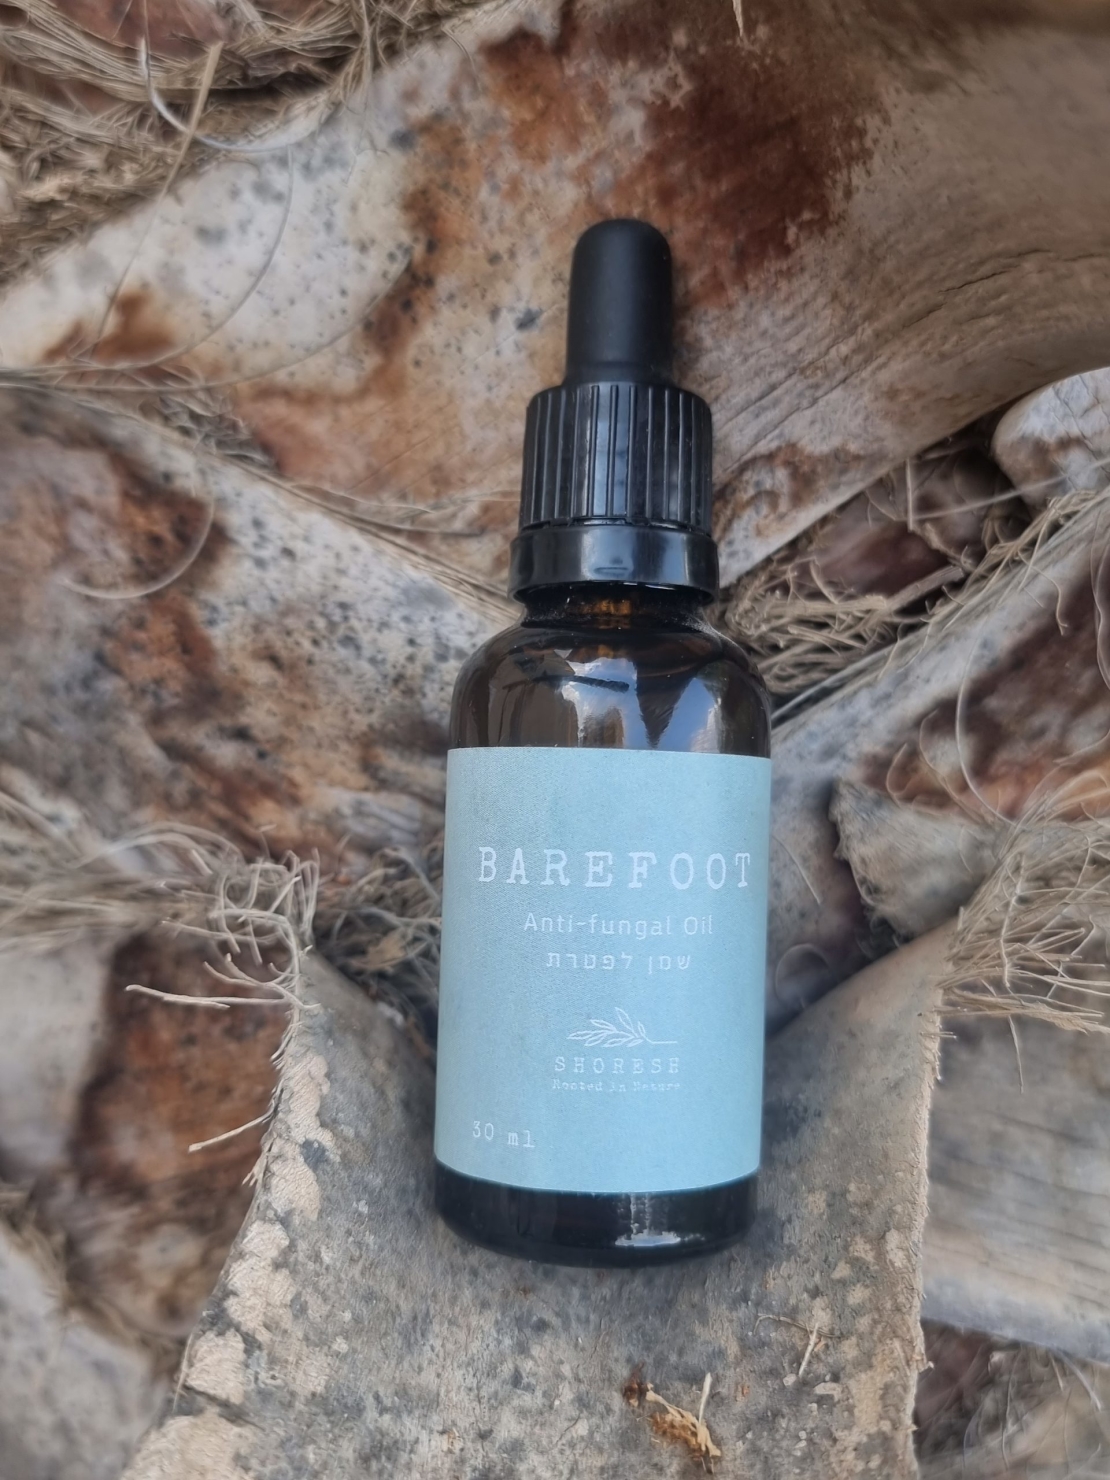 Barefoot Anti-fungal Oil